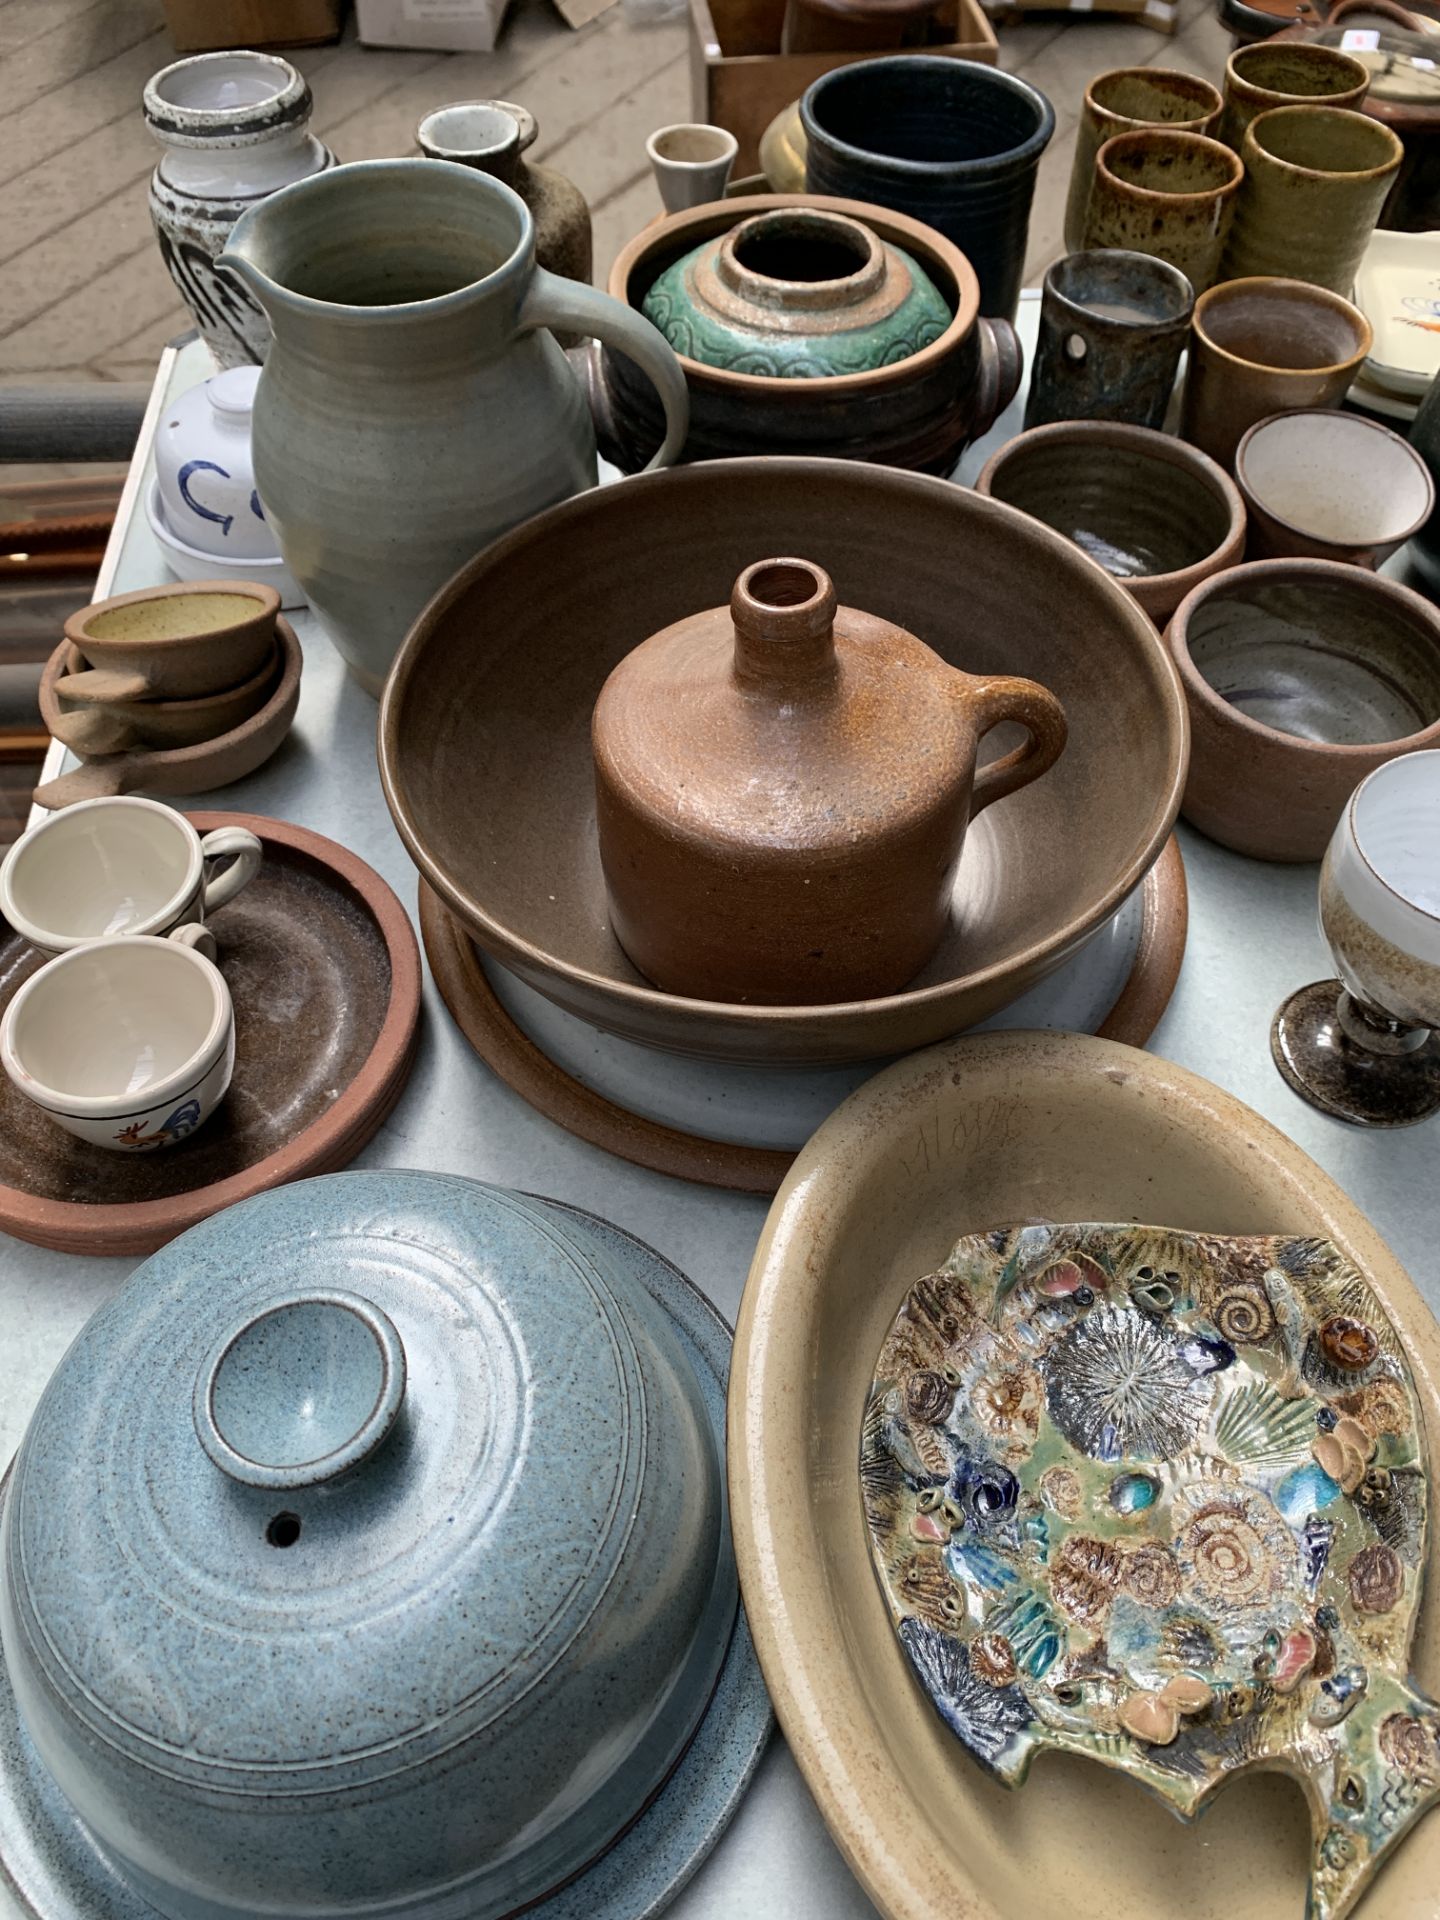 Quantity of stoneware items